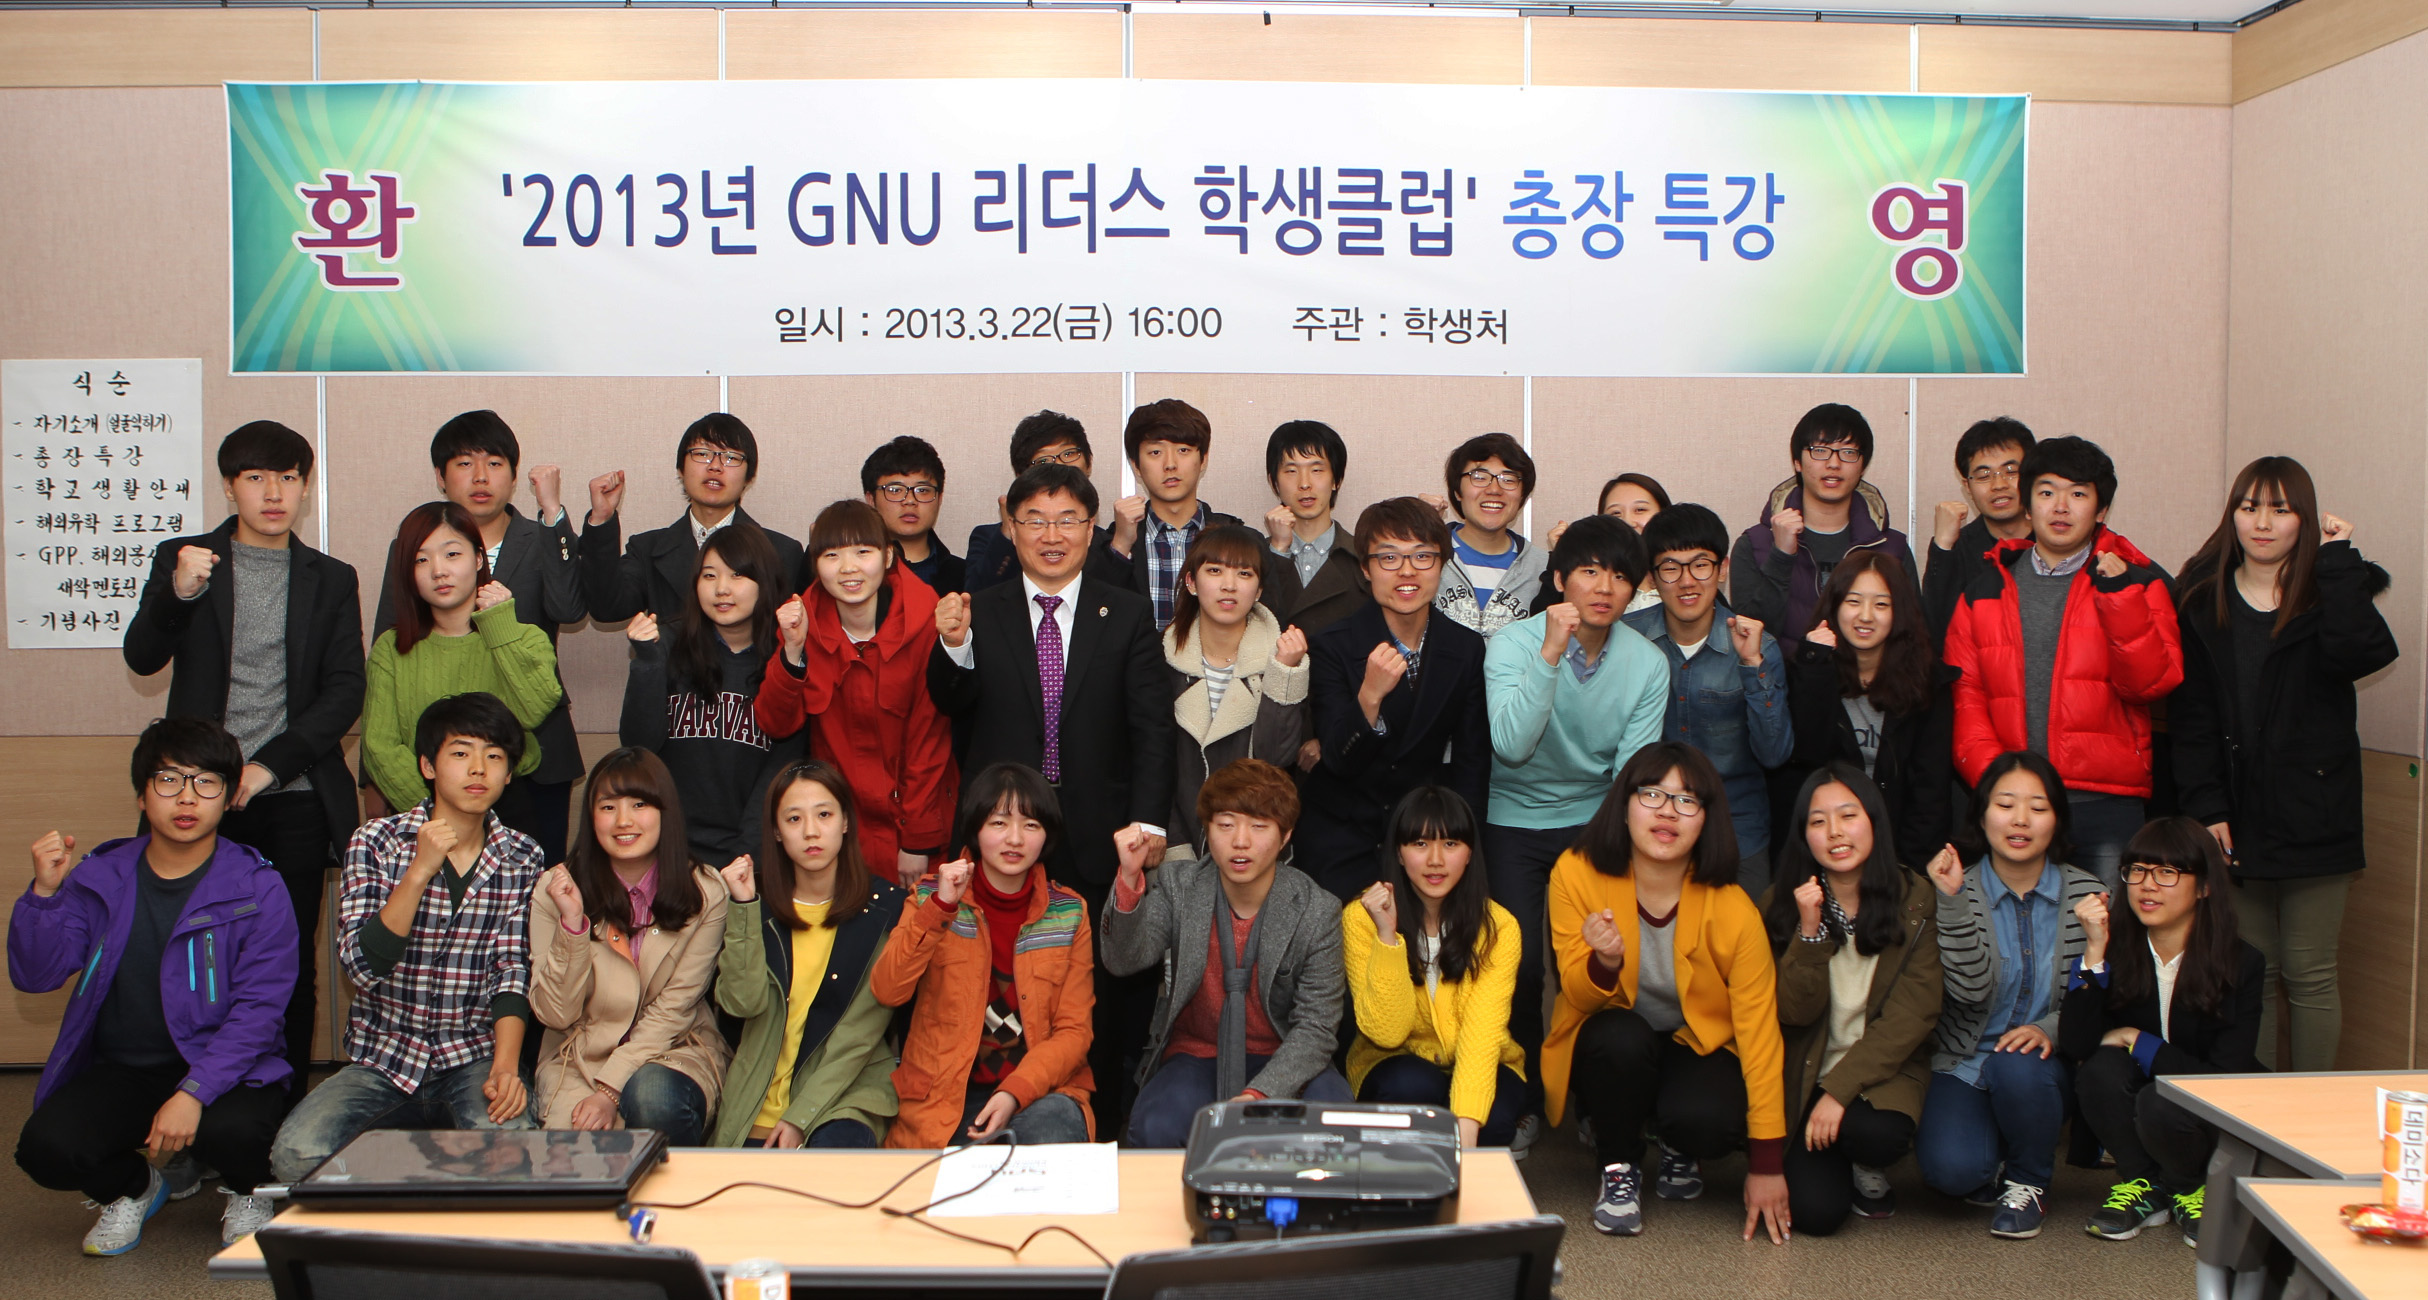 2013 GNU  лŬ  : ̹